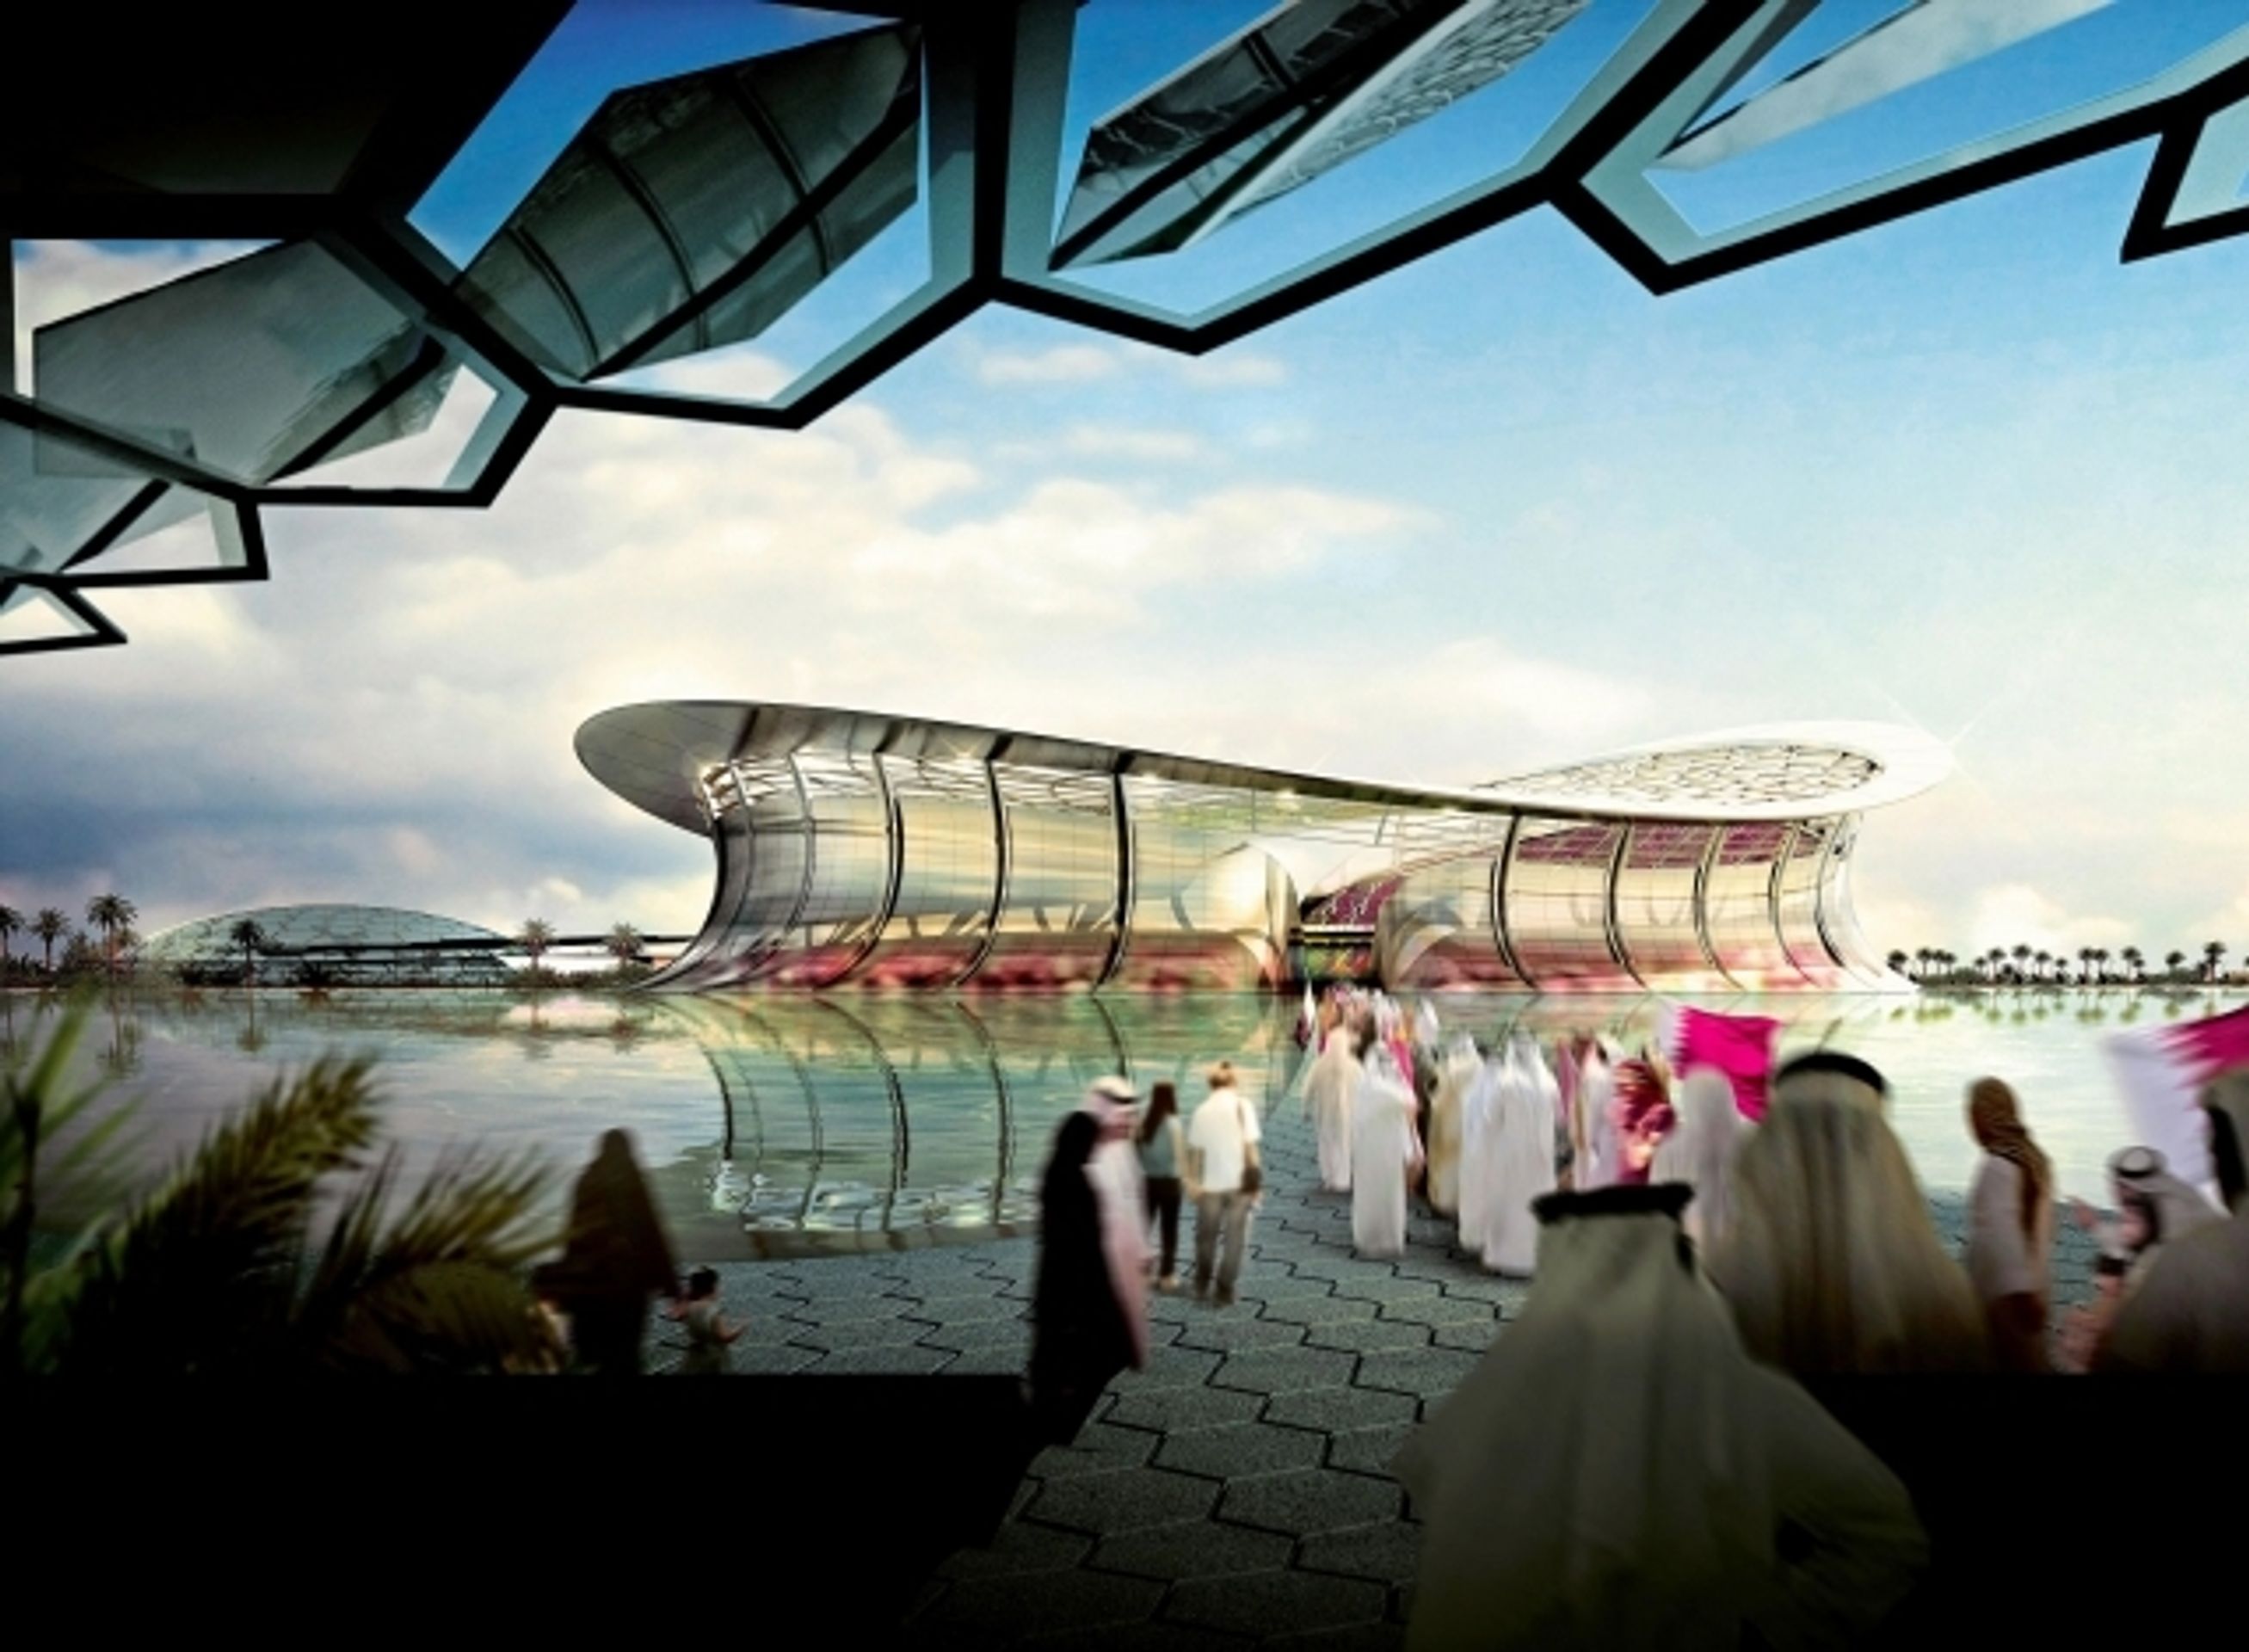 Stadiony MS 2022 v Kataru - 7 - GALERIE: Stadiony pro fotbalové MS 2022 v Kataru (7/11)